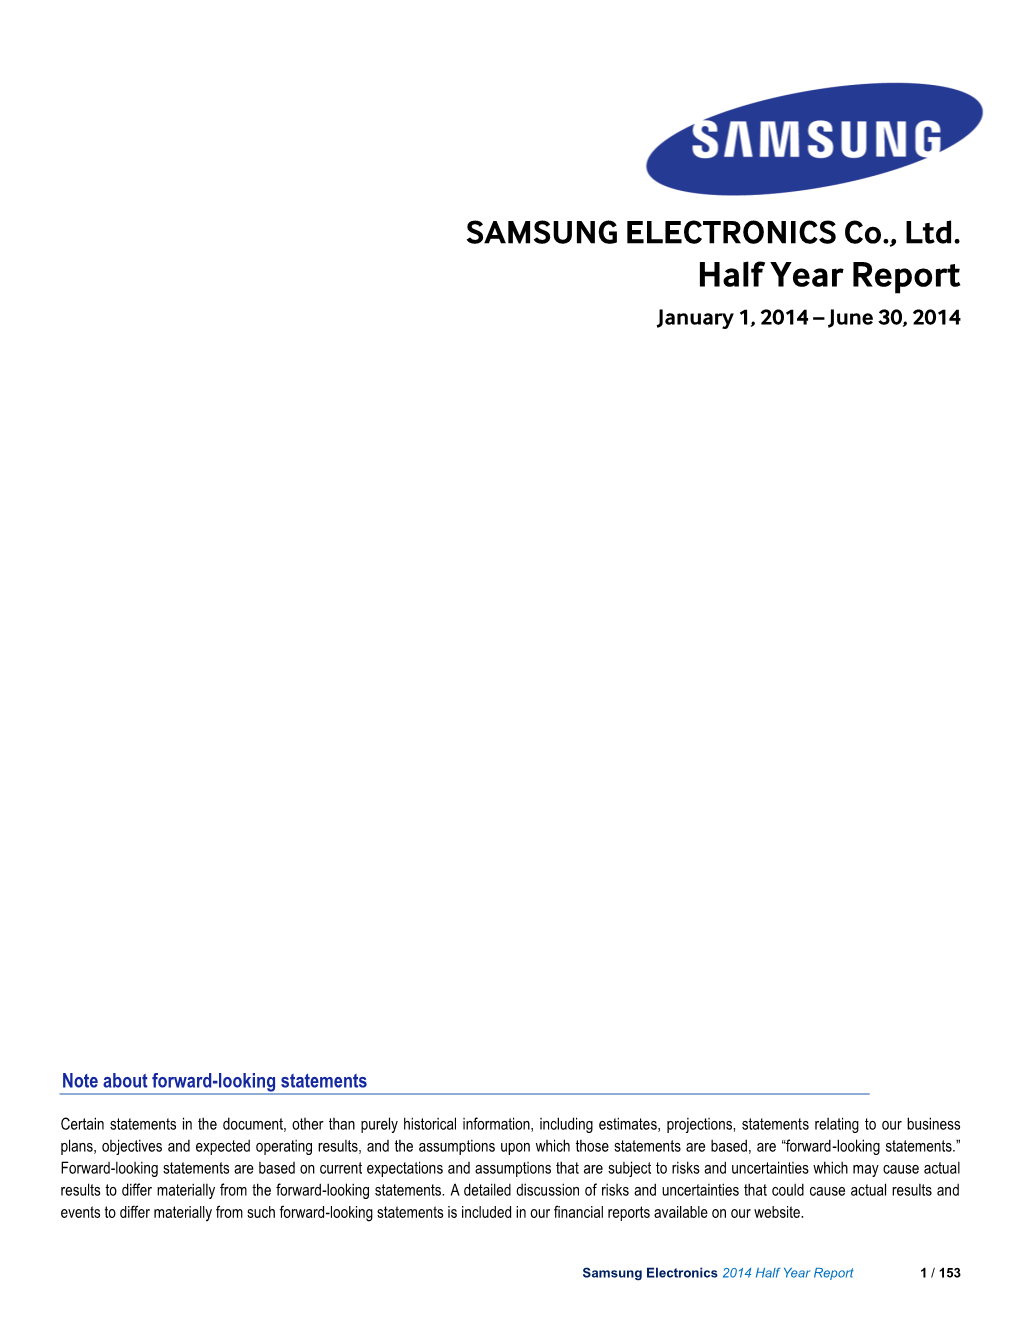 SAMSUNG ELECTRONICS Co., Ltd. Half Year Report January 1, 2014 – June 30, 2014